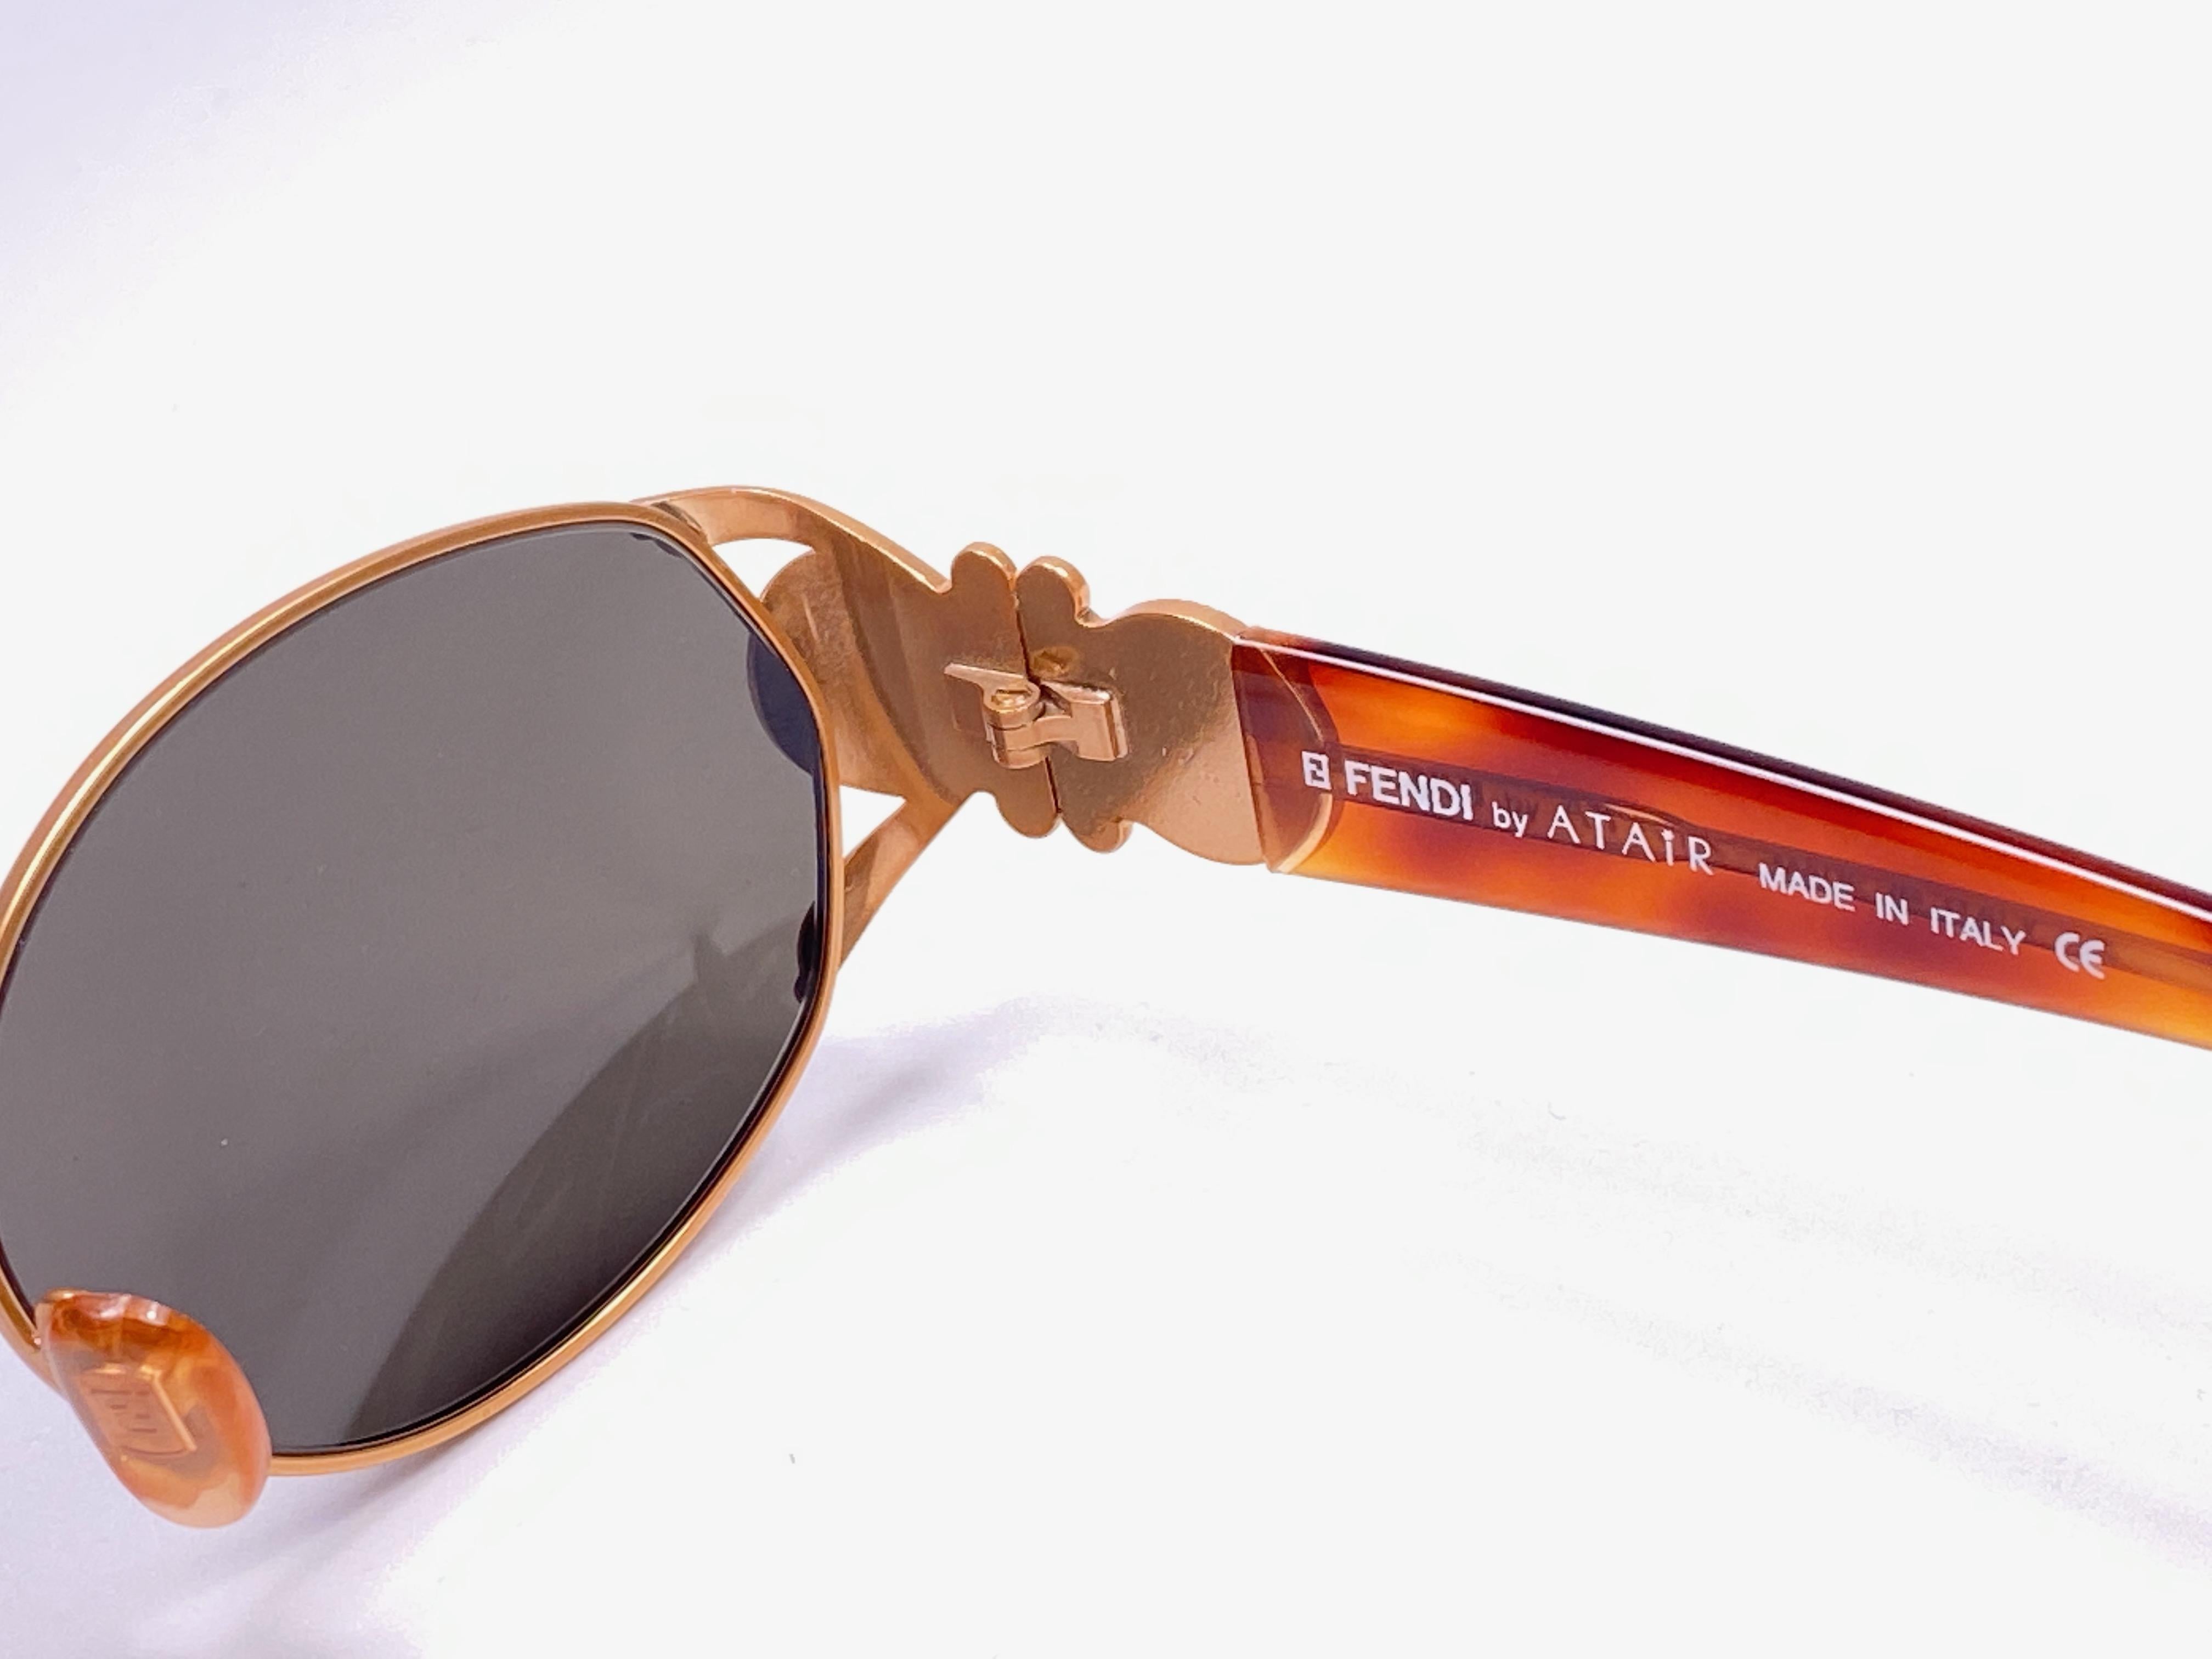 fendi sunglasses made in italy